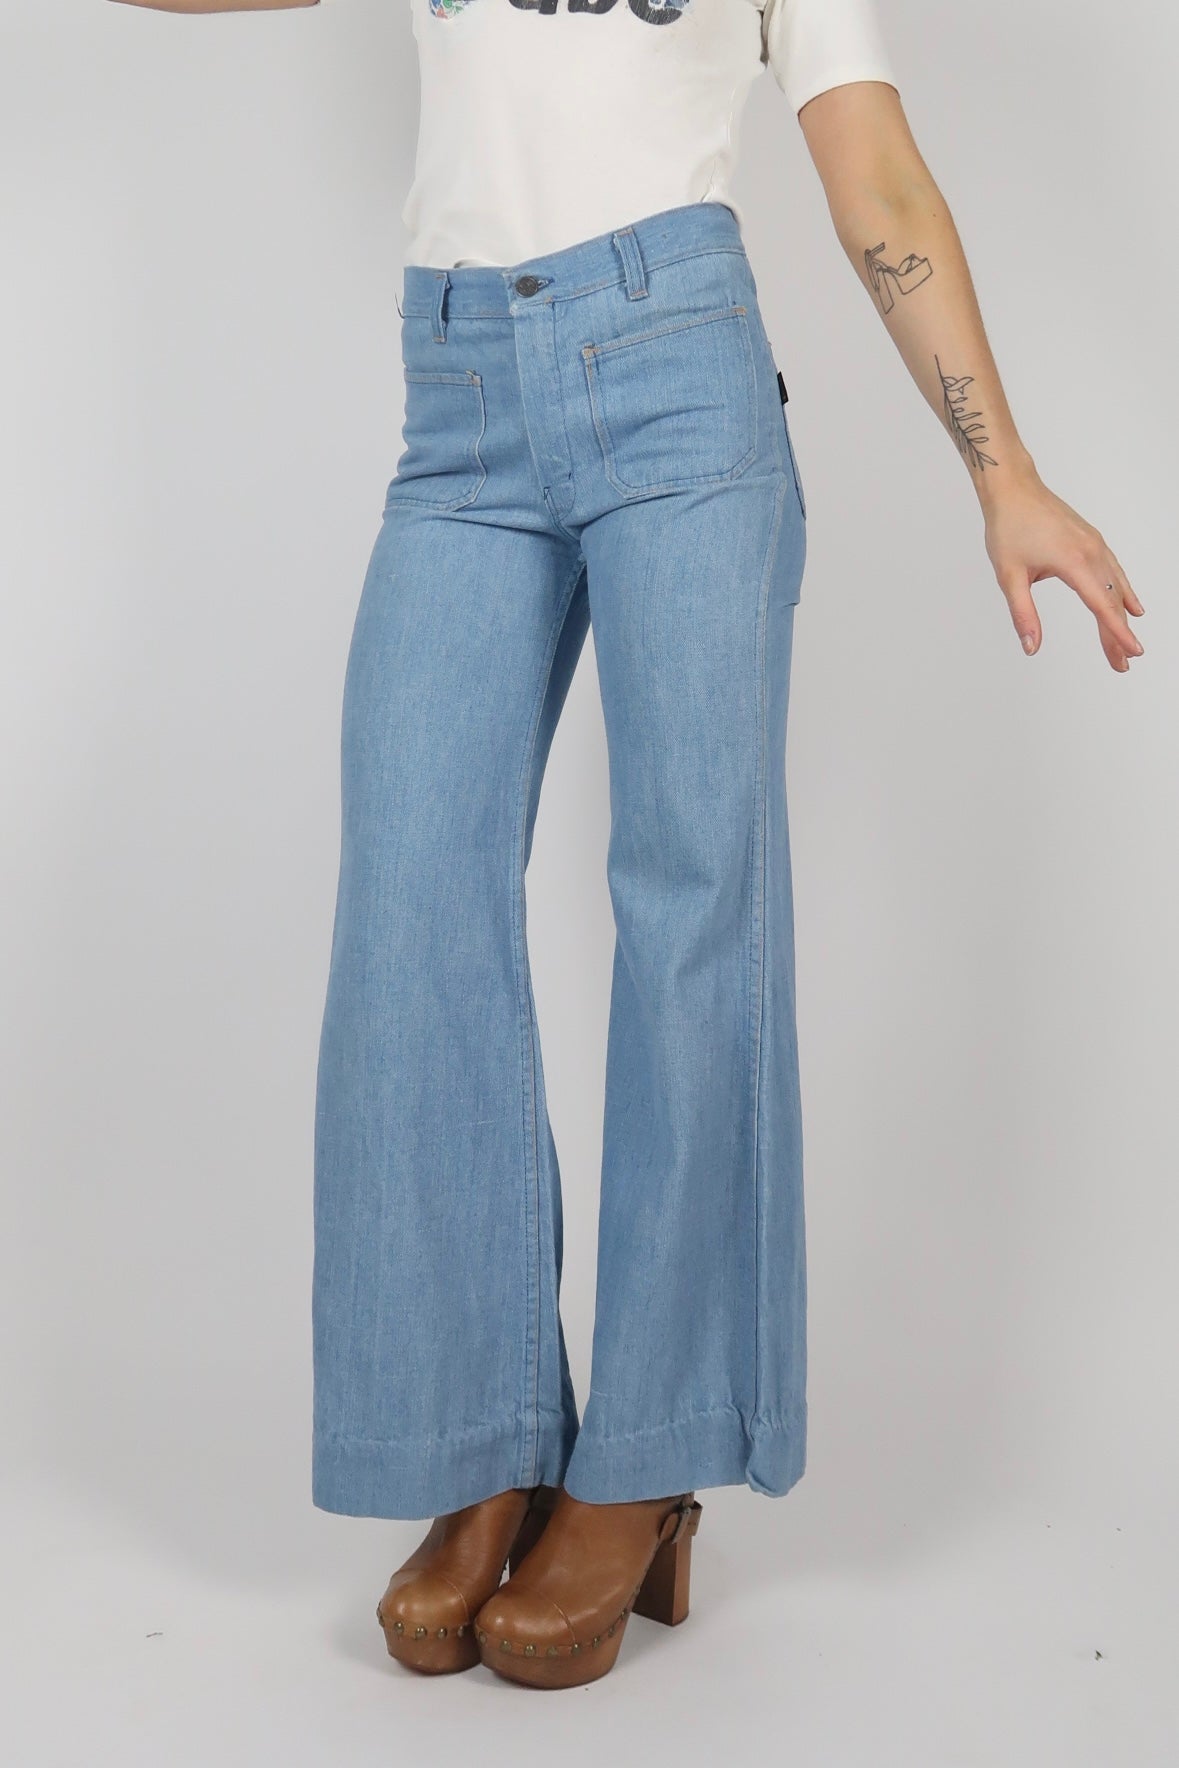 1970s light wash denim flare jeans